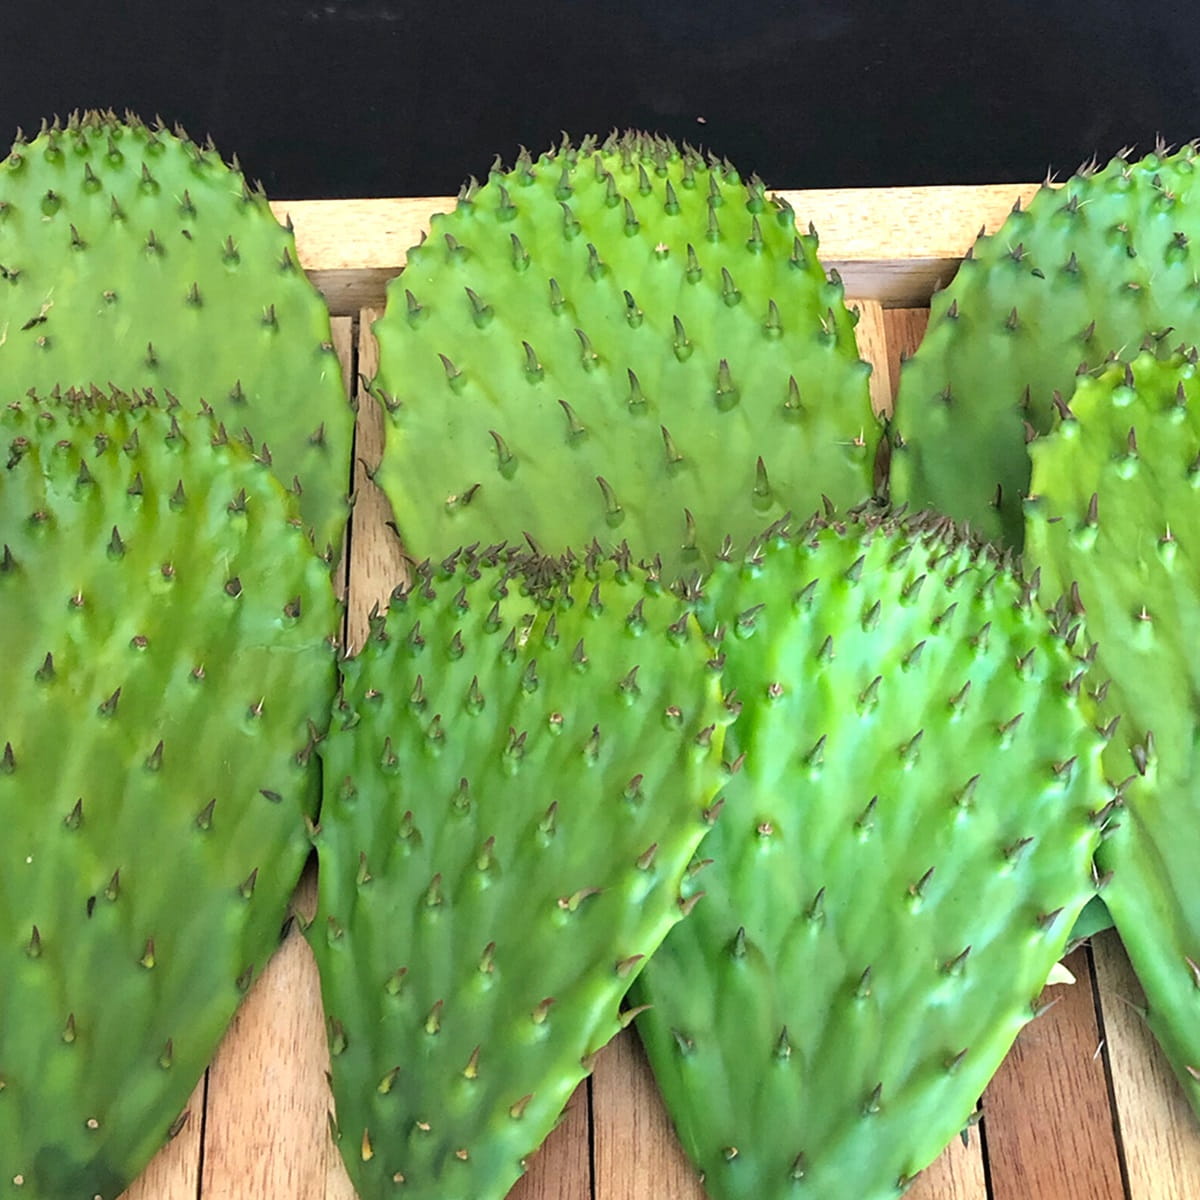 Nopal cactus paddles